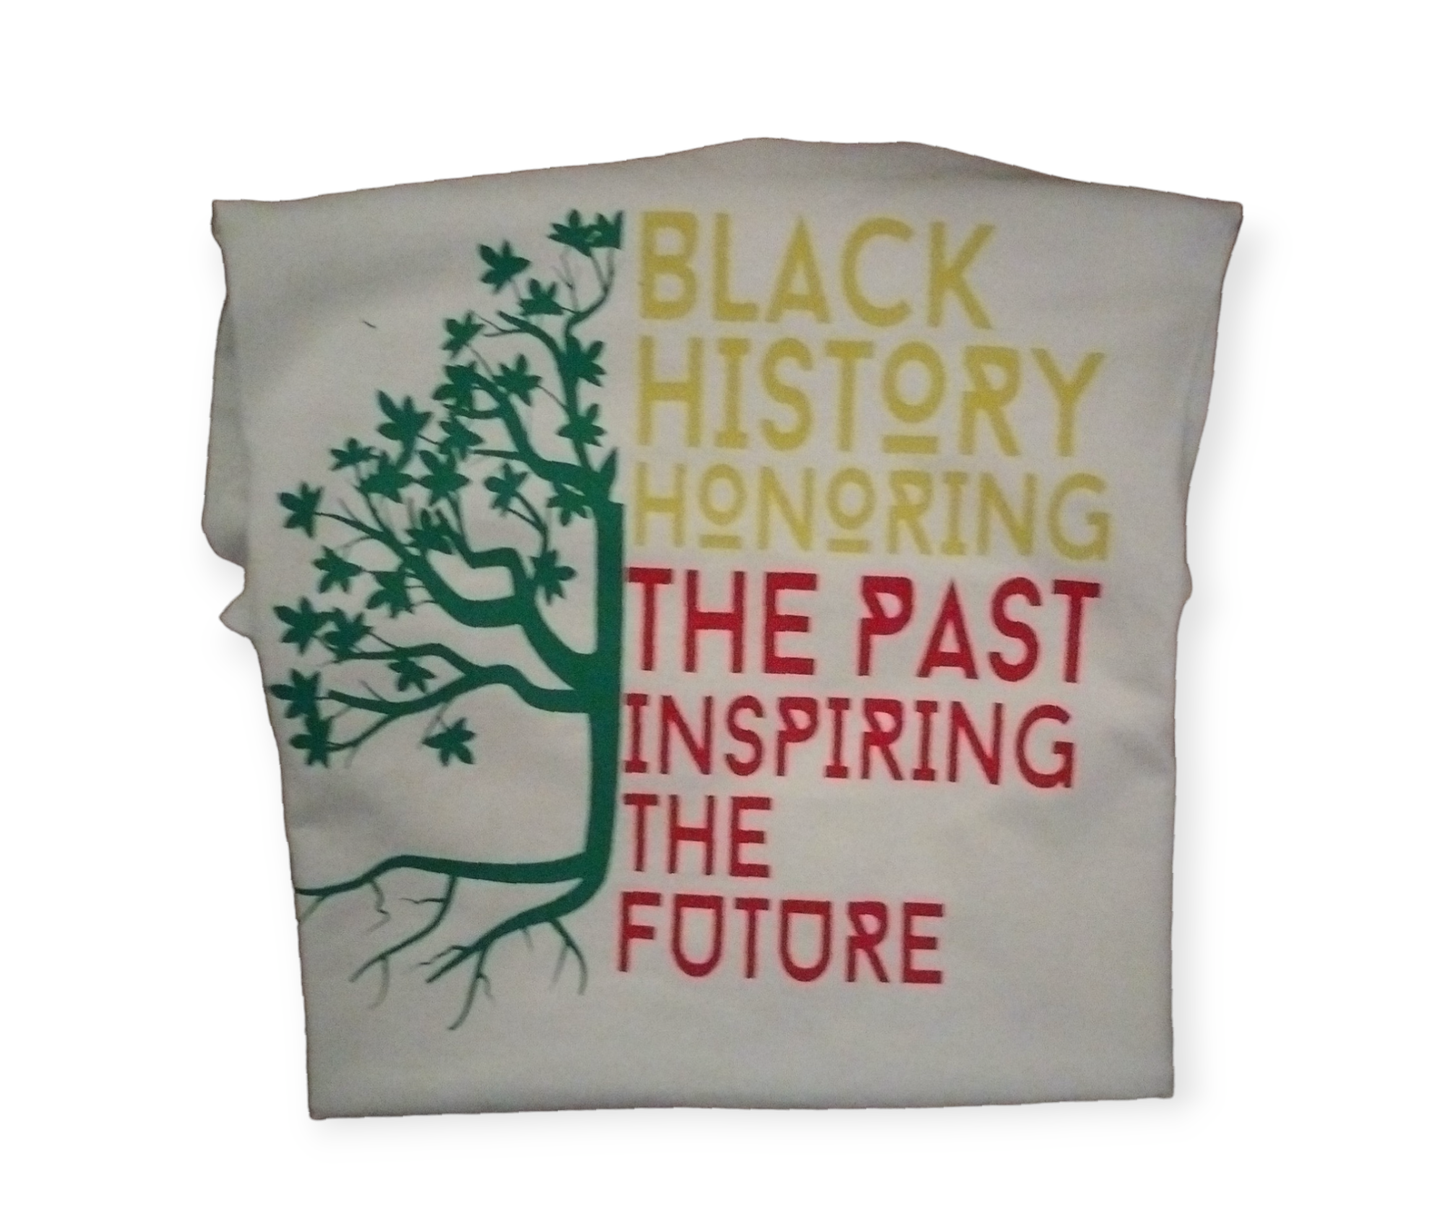 Black History Honoring the past inspiring the future T-shirt